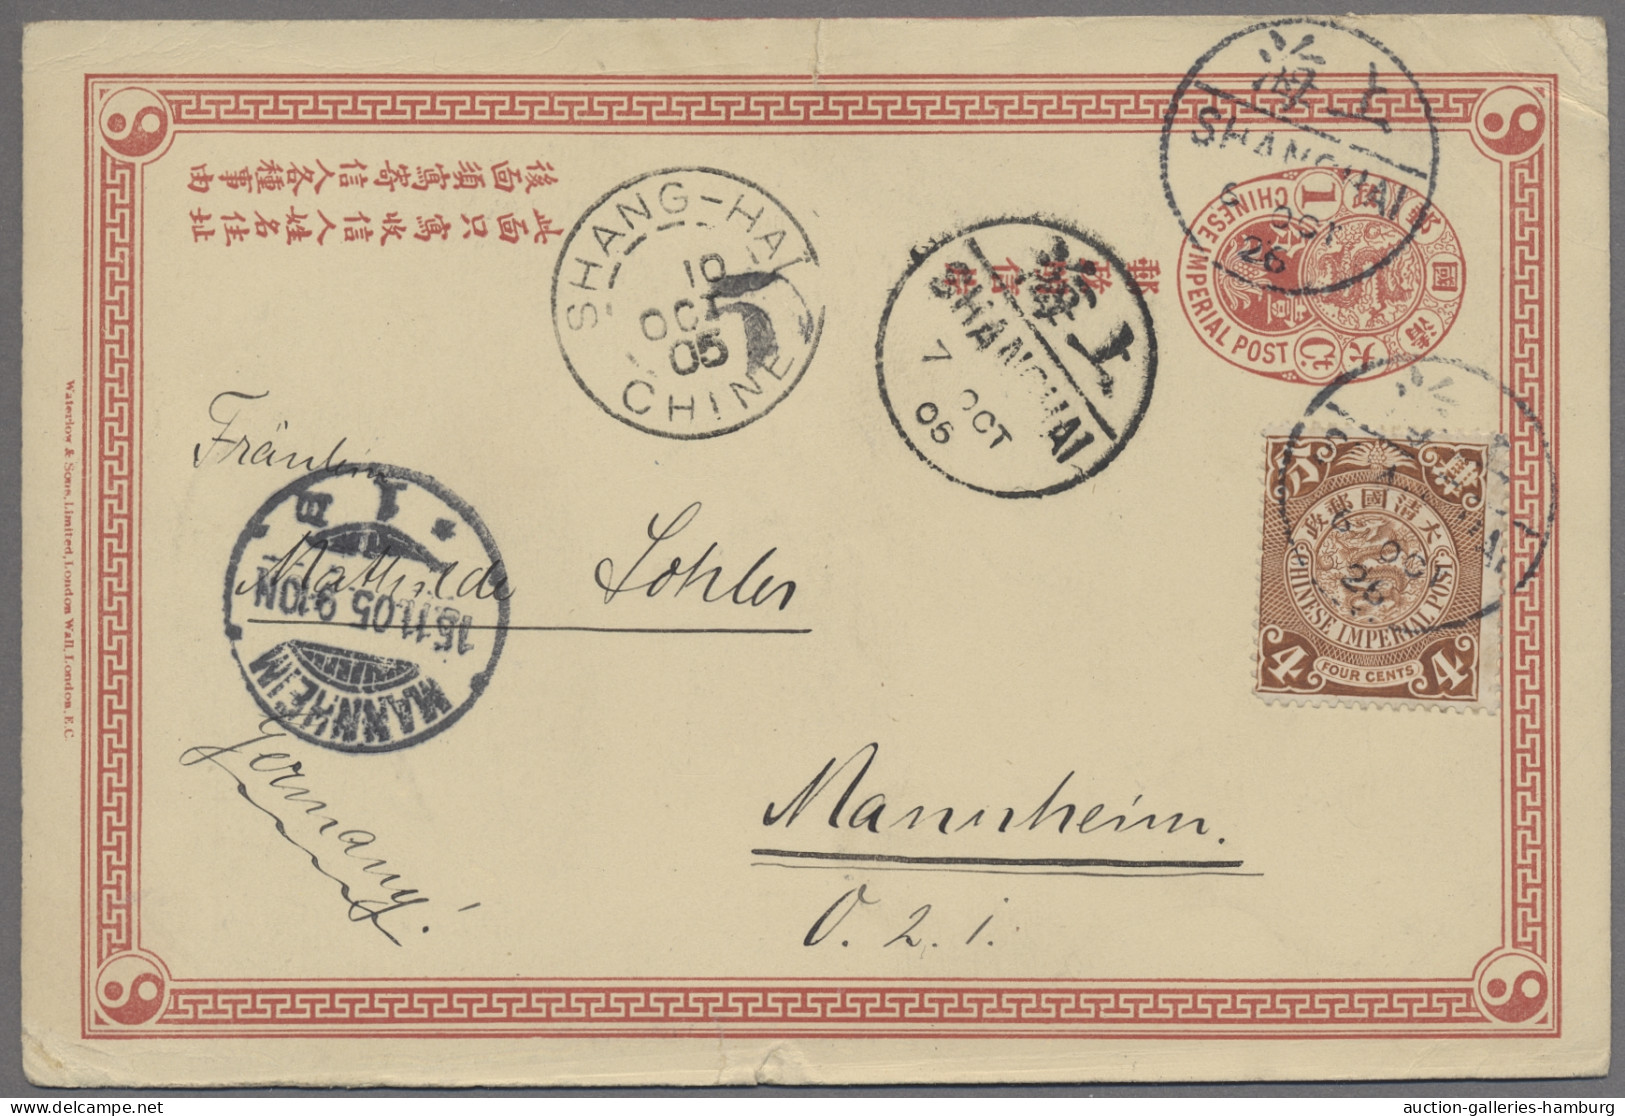 China - Postal Stationery: 1905, Ganzsachenkarte 1 C. Mit Zusatzfrankatur 4 C. A - Cartoline Postali